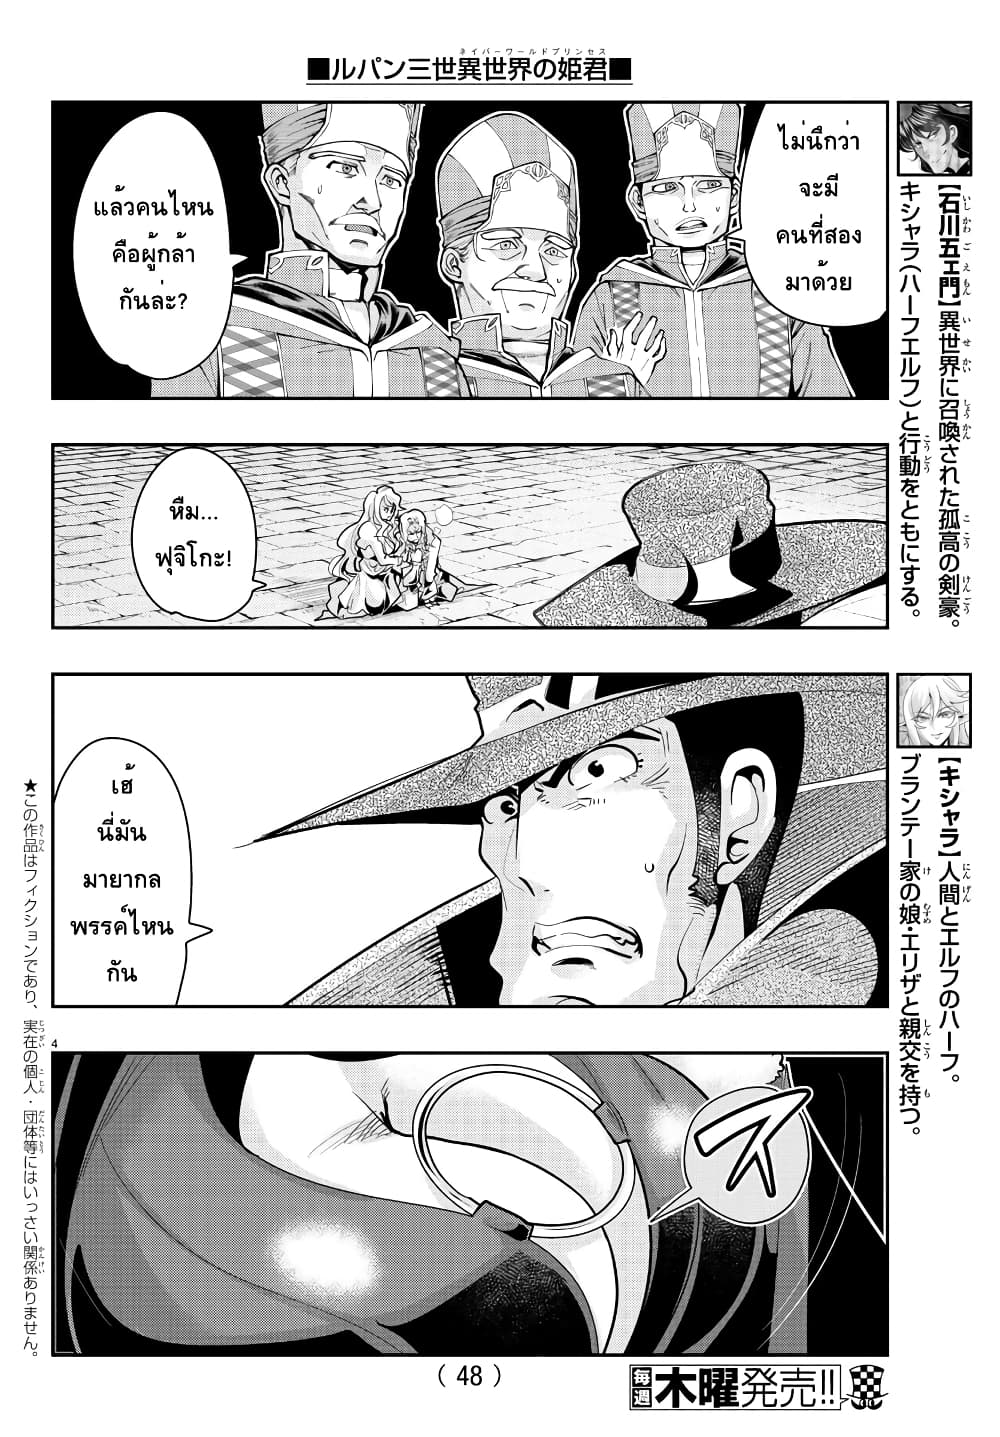 Lupin Sansei Isekai no Himegimi 9 (6)